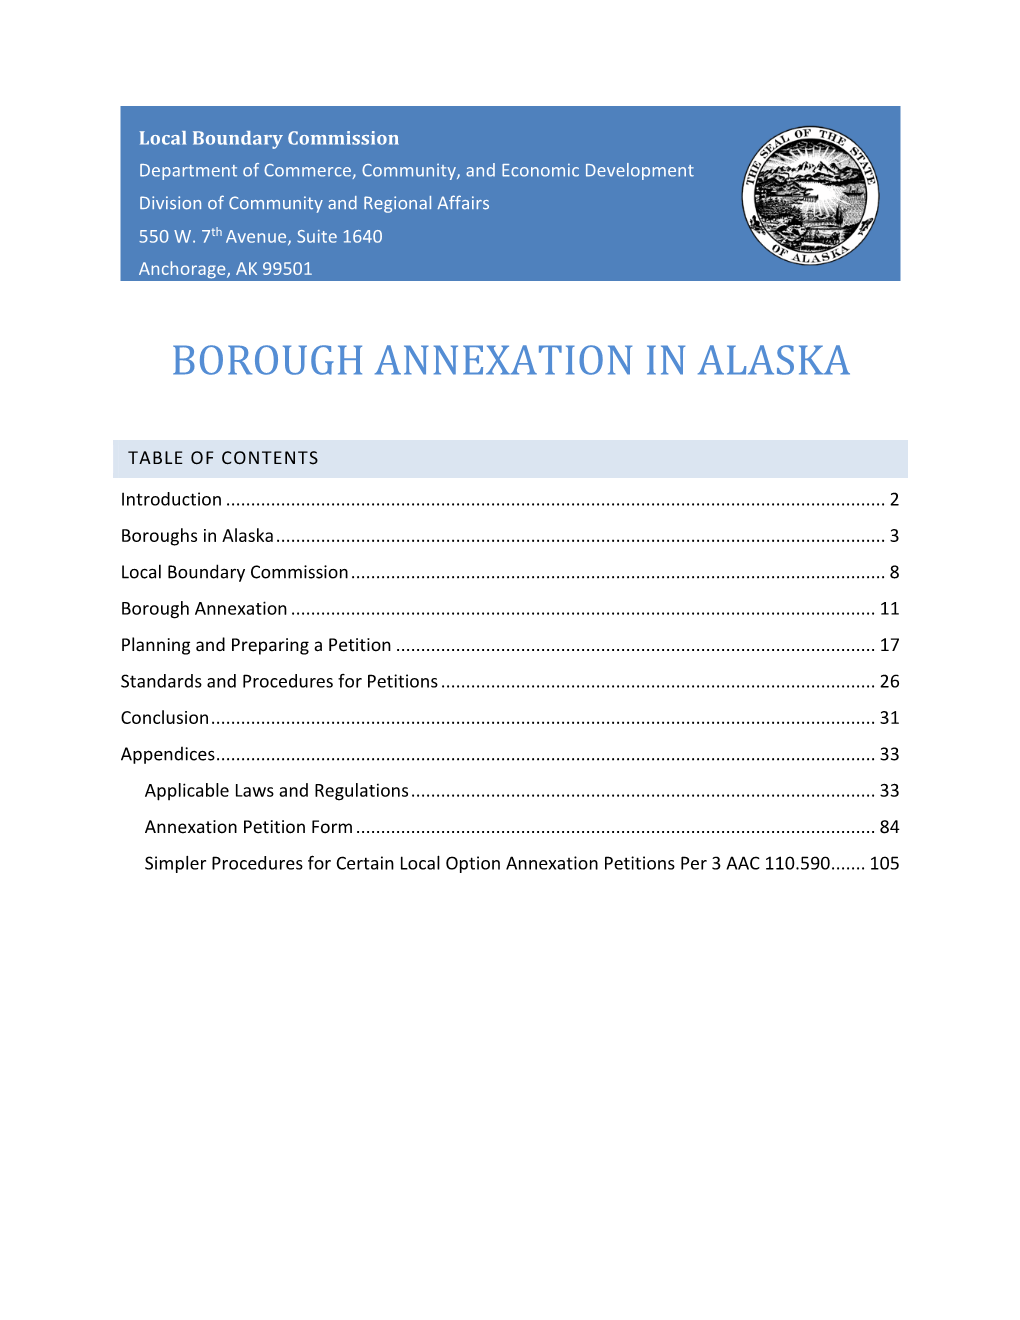 Borough Annexation in Alaska